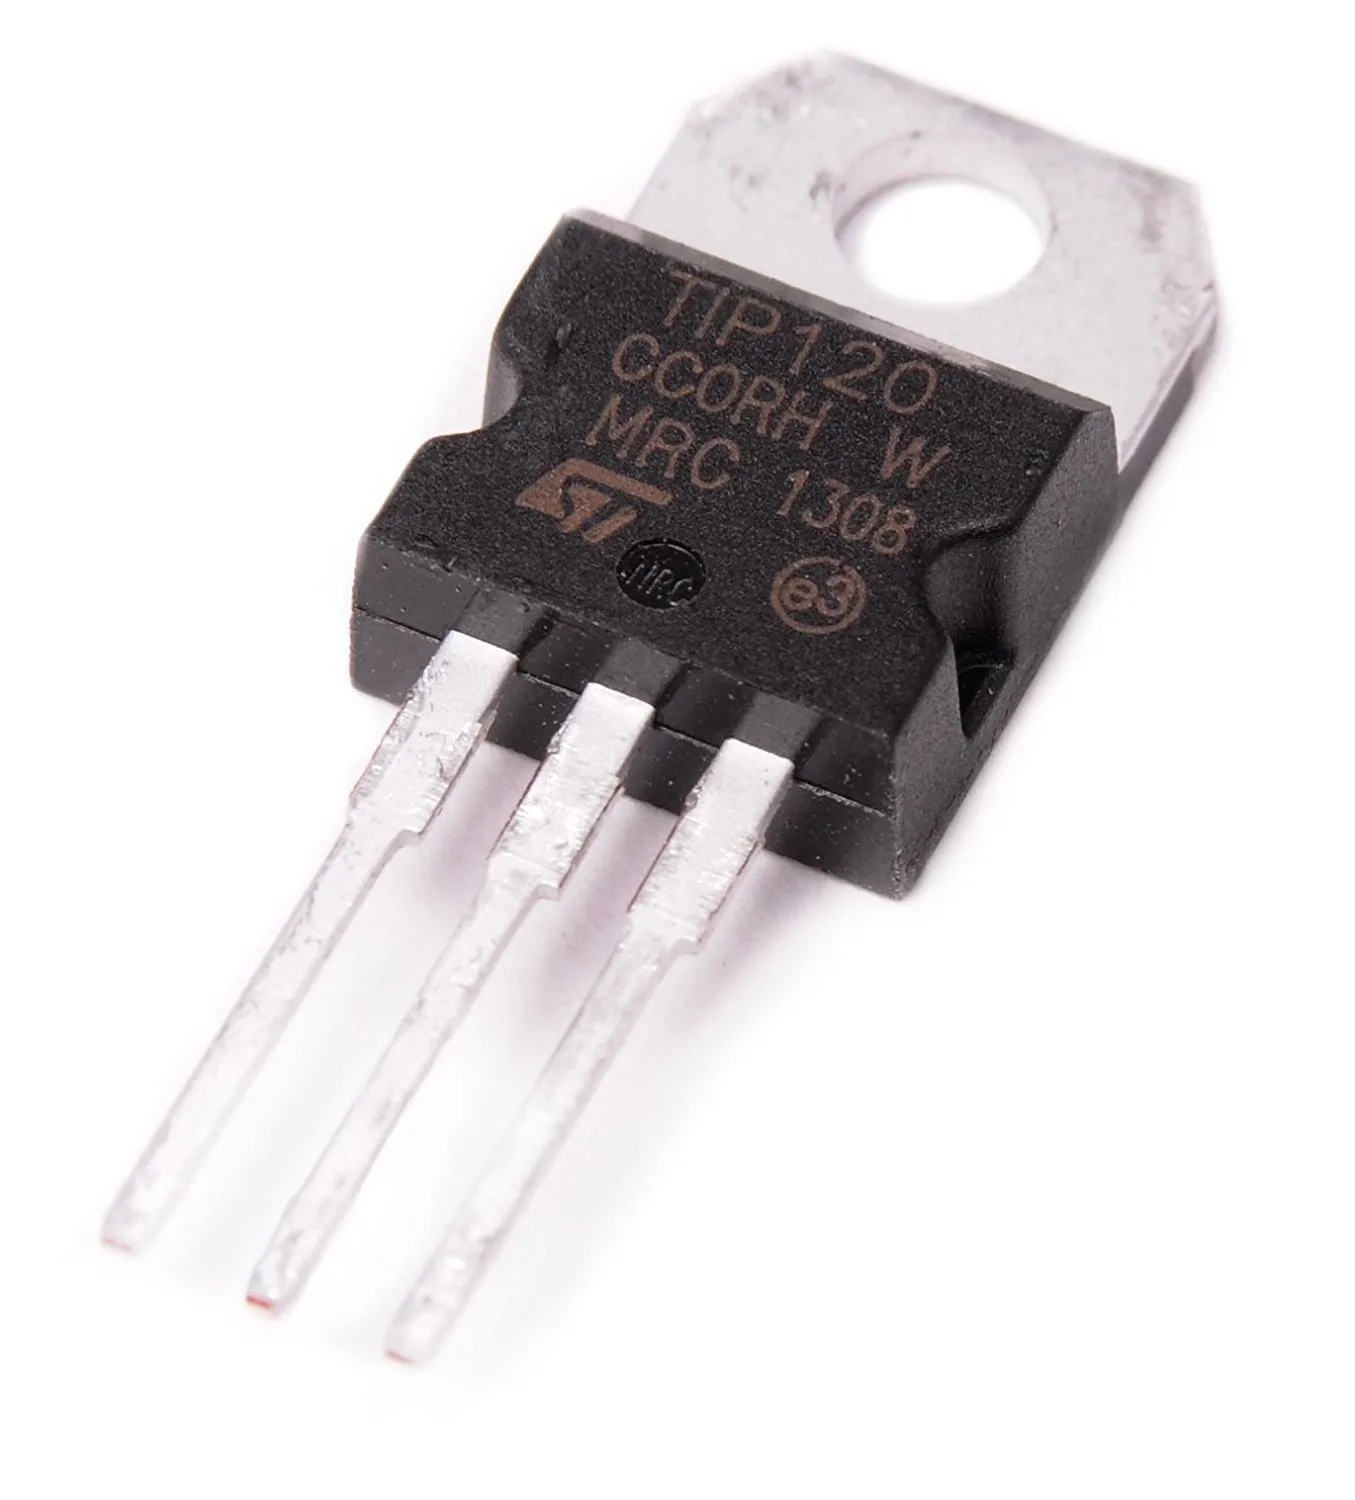 ТРАНЗИСТОР TIP120 DARLINGTON NPN 60V 5A транзистор TO-220 | Электронные компоненты и